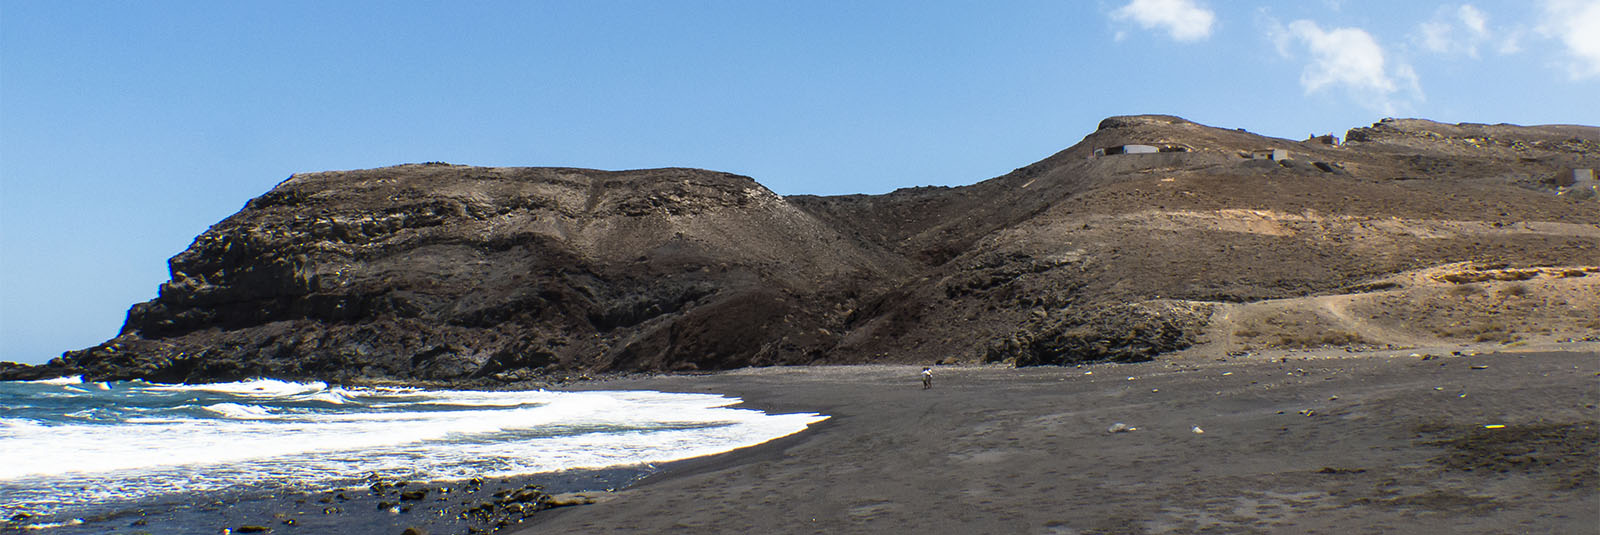 Die Strände Fuerteventuras: Ensenada de Gran Valle.